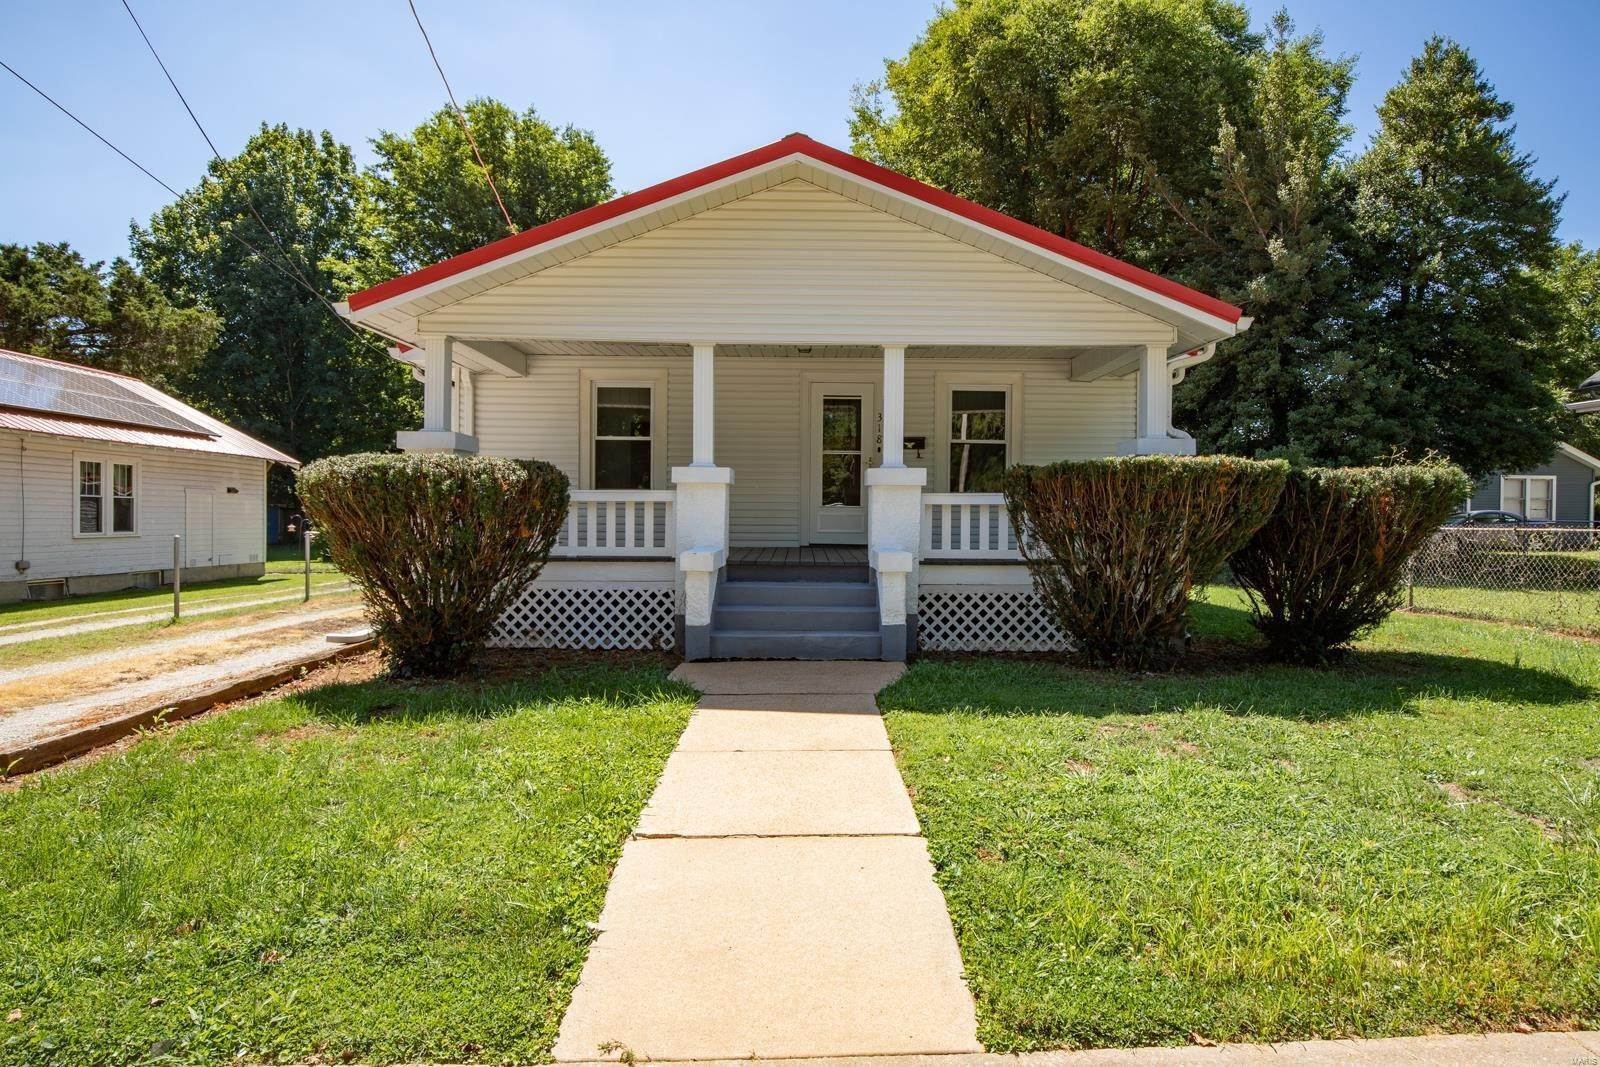 Property for Sale at 318 W College Street Farmington, Missouri 63640 United States